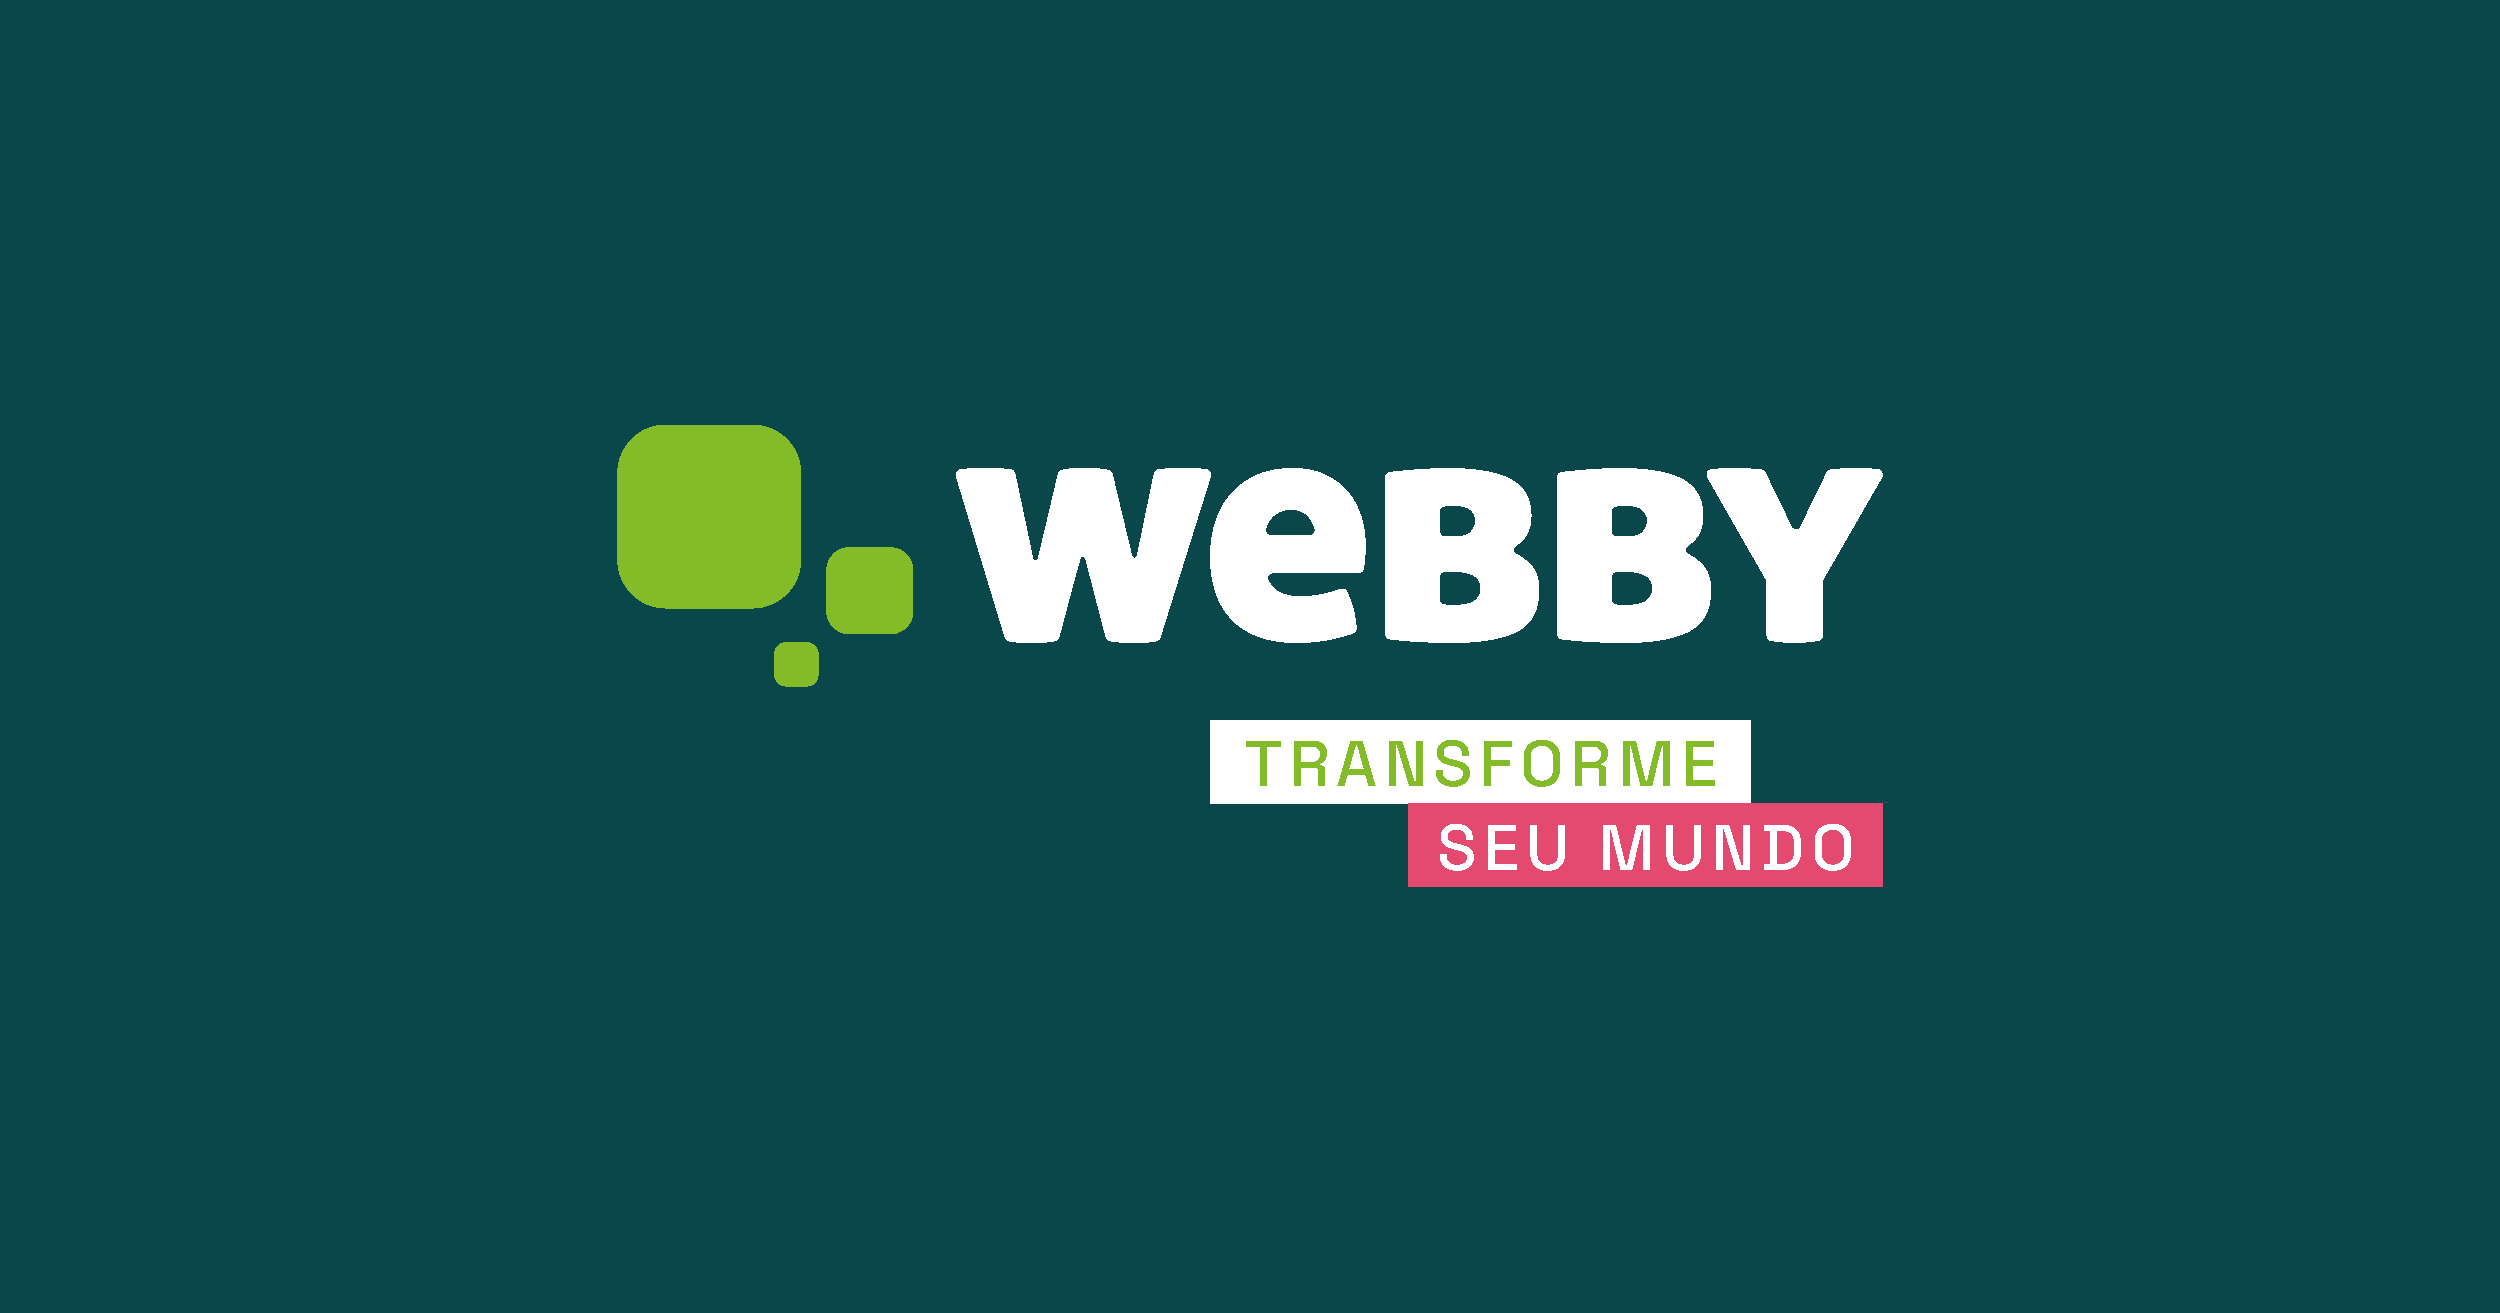 (c) Webbyinternet.com.br